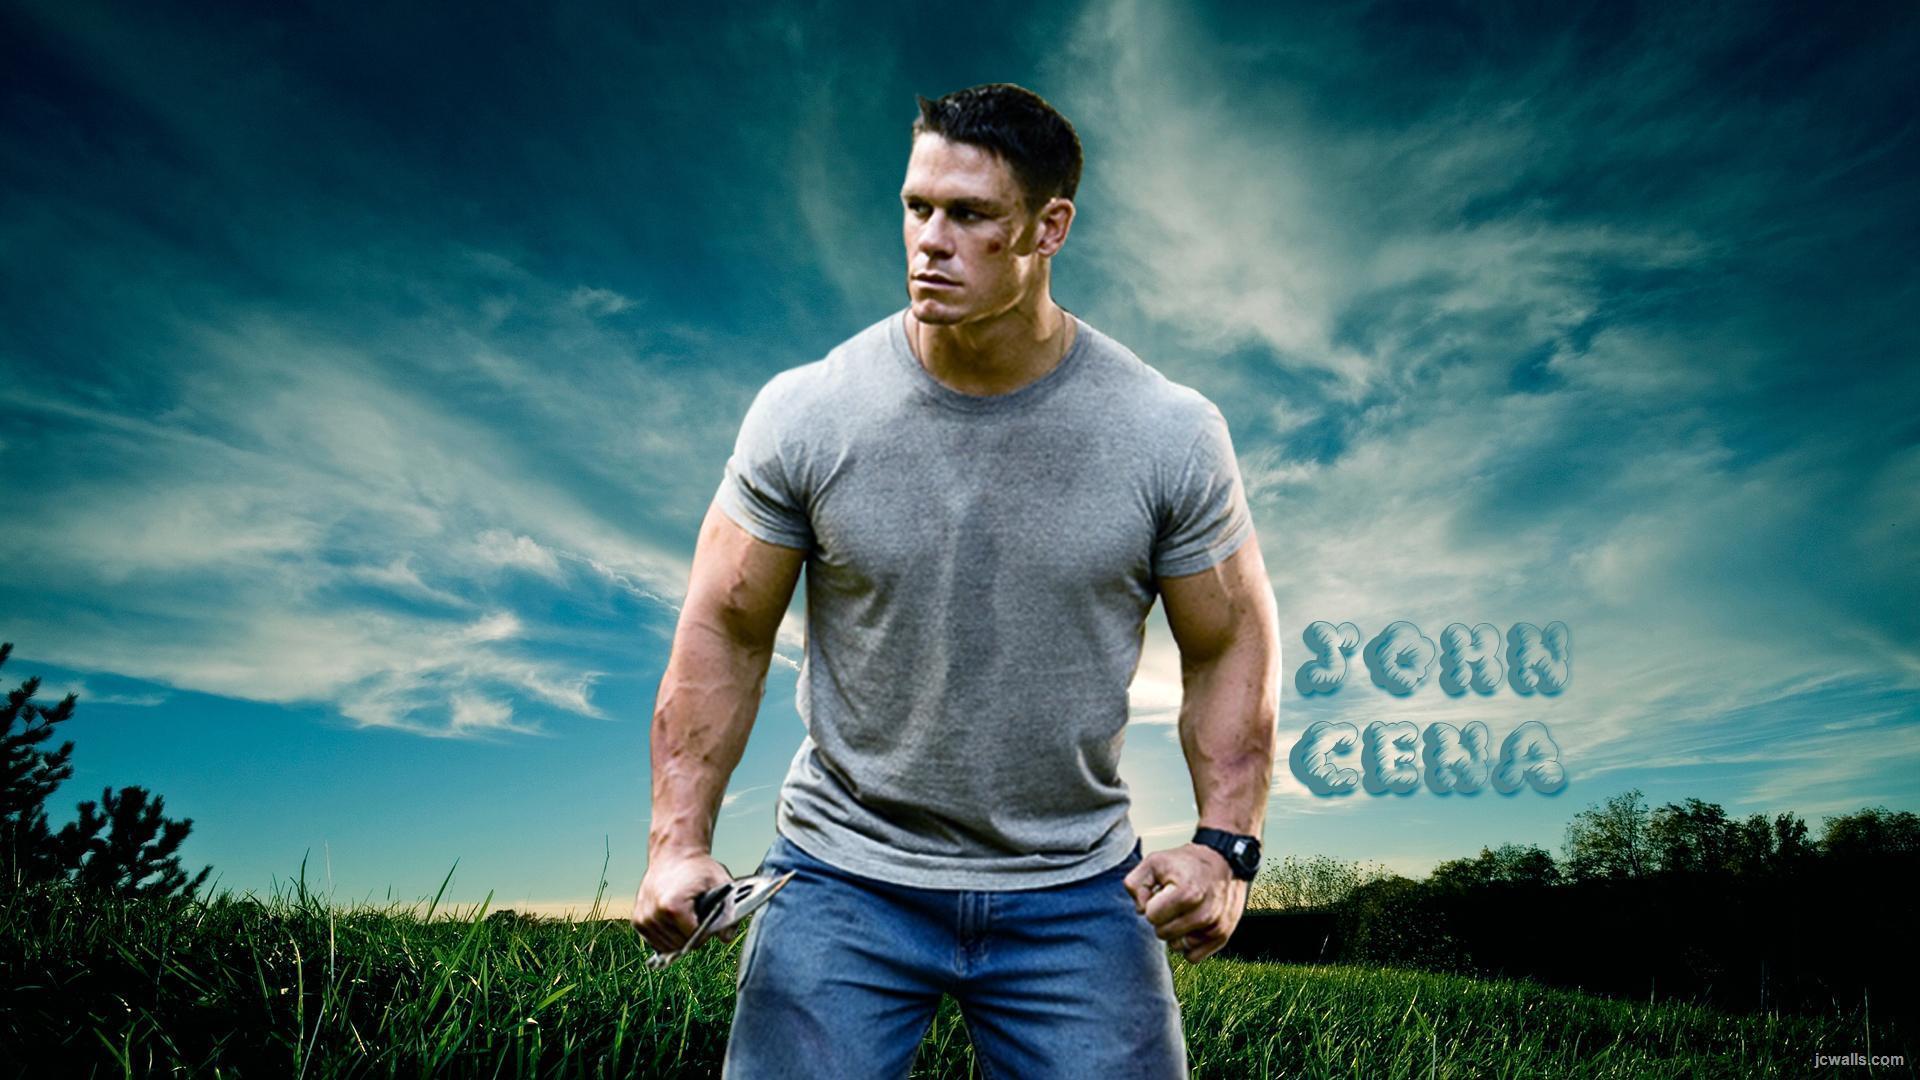 John Cena Wallpaper 2015 For Desktop HD